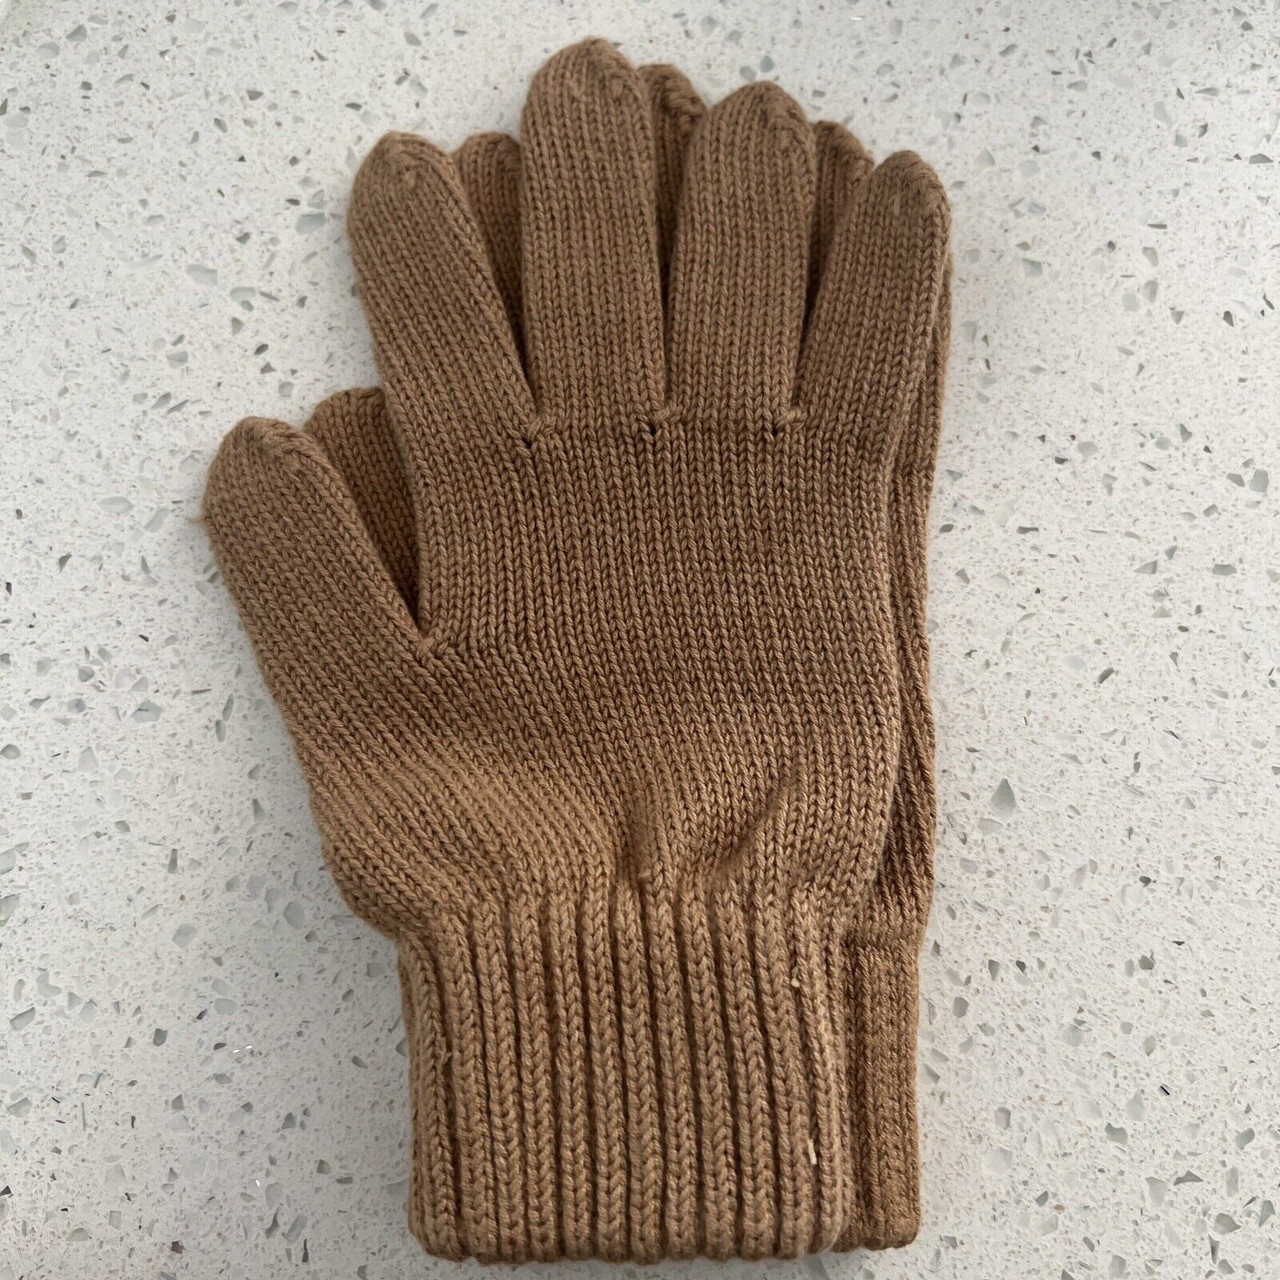 Body4Real Organic Kids Gloves